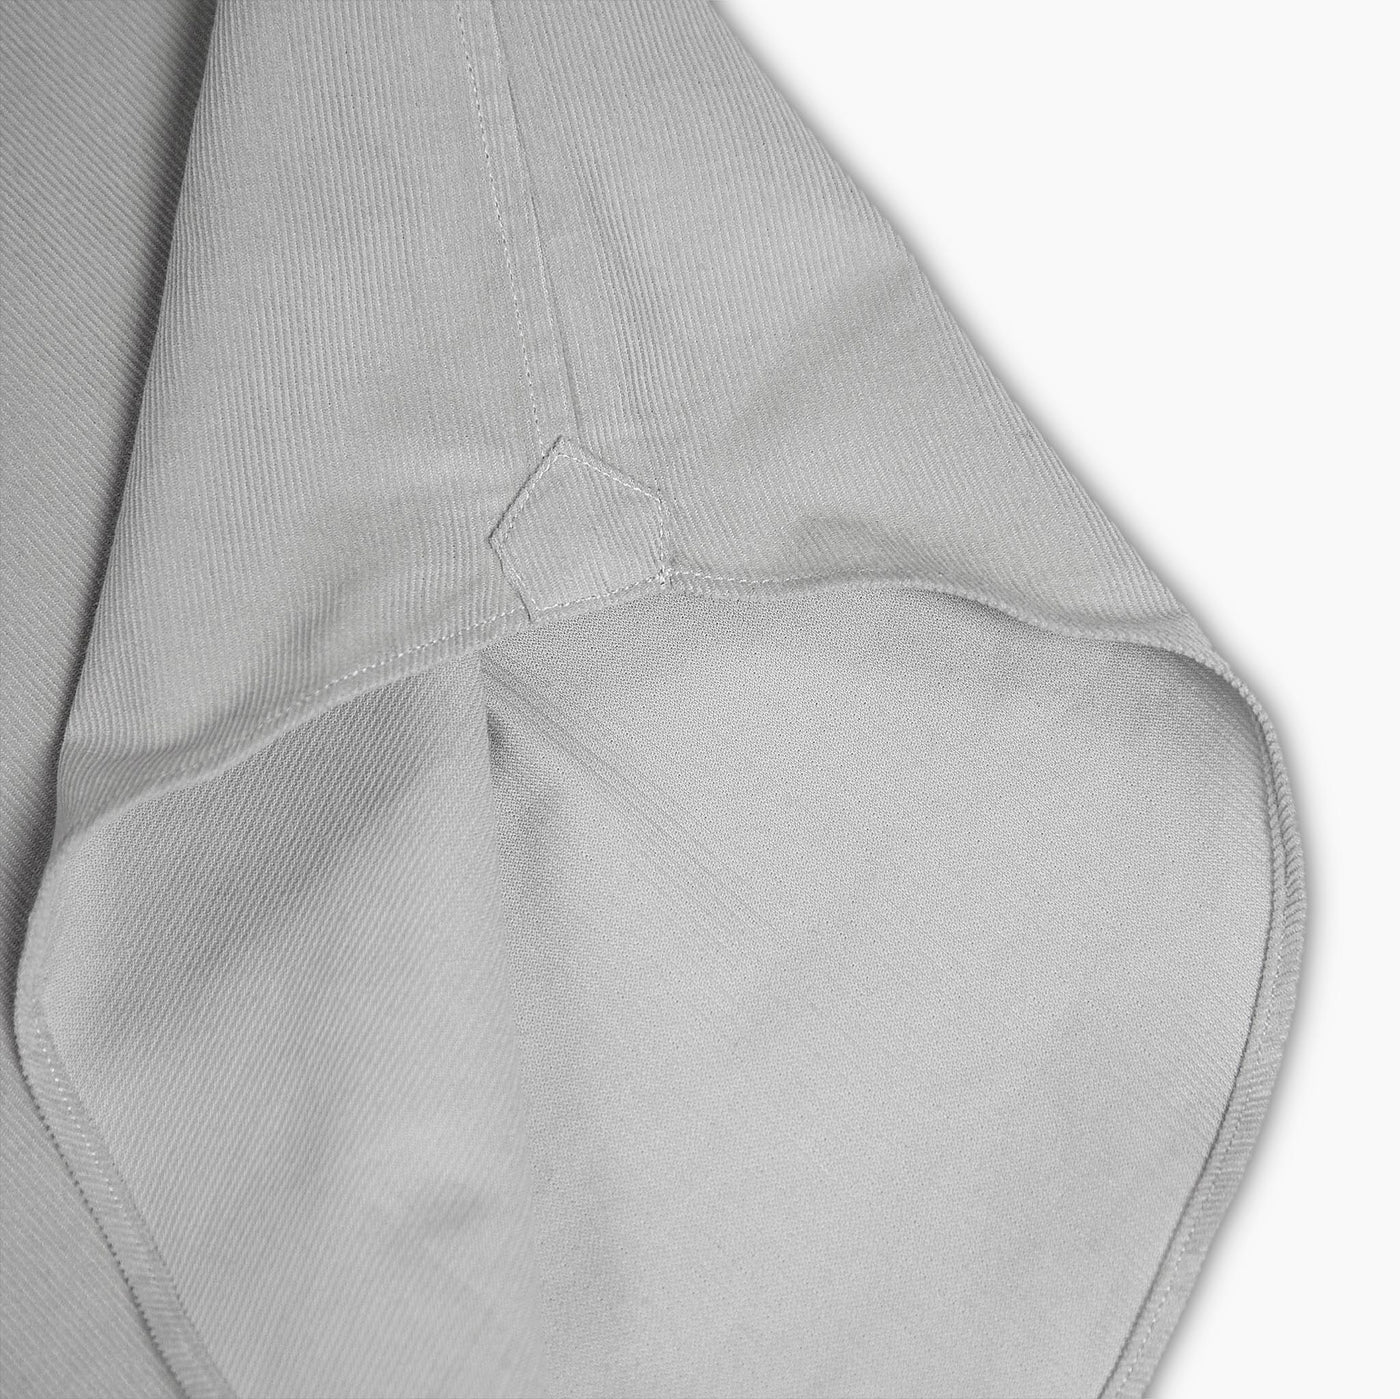 Clamenc soft cotton corduroy shirt (stone grey)